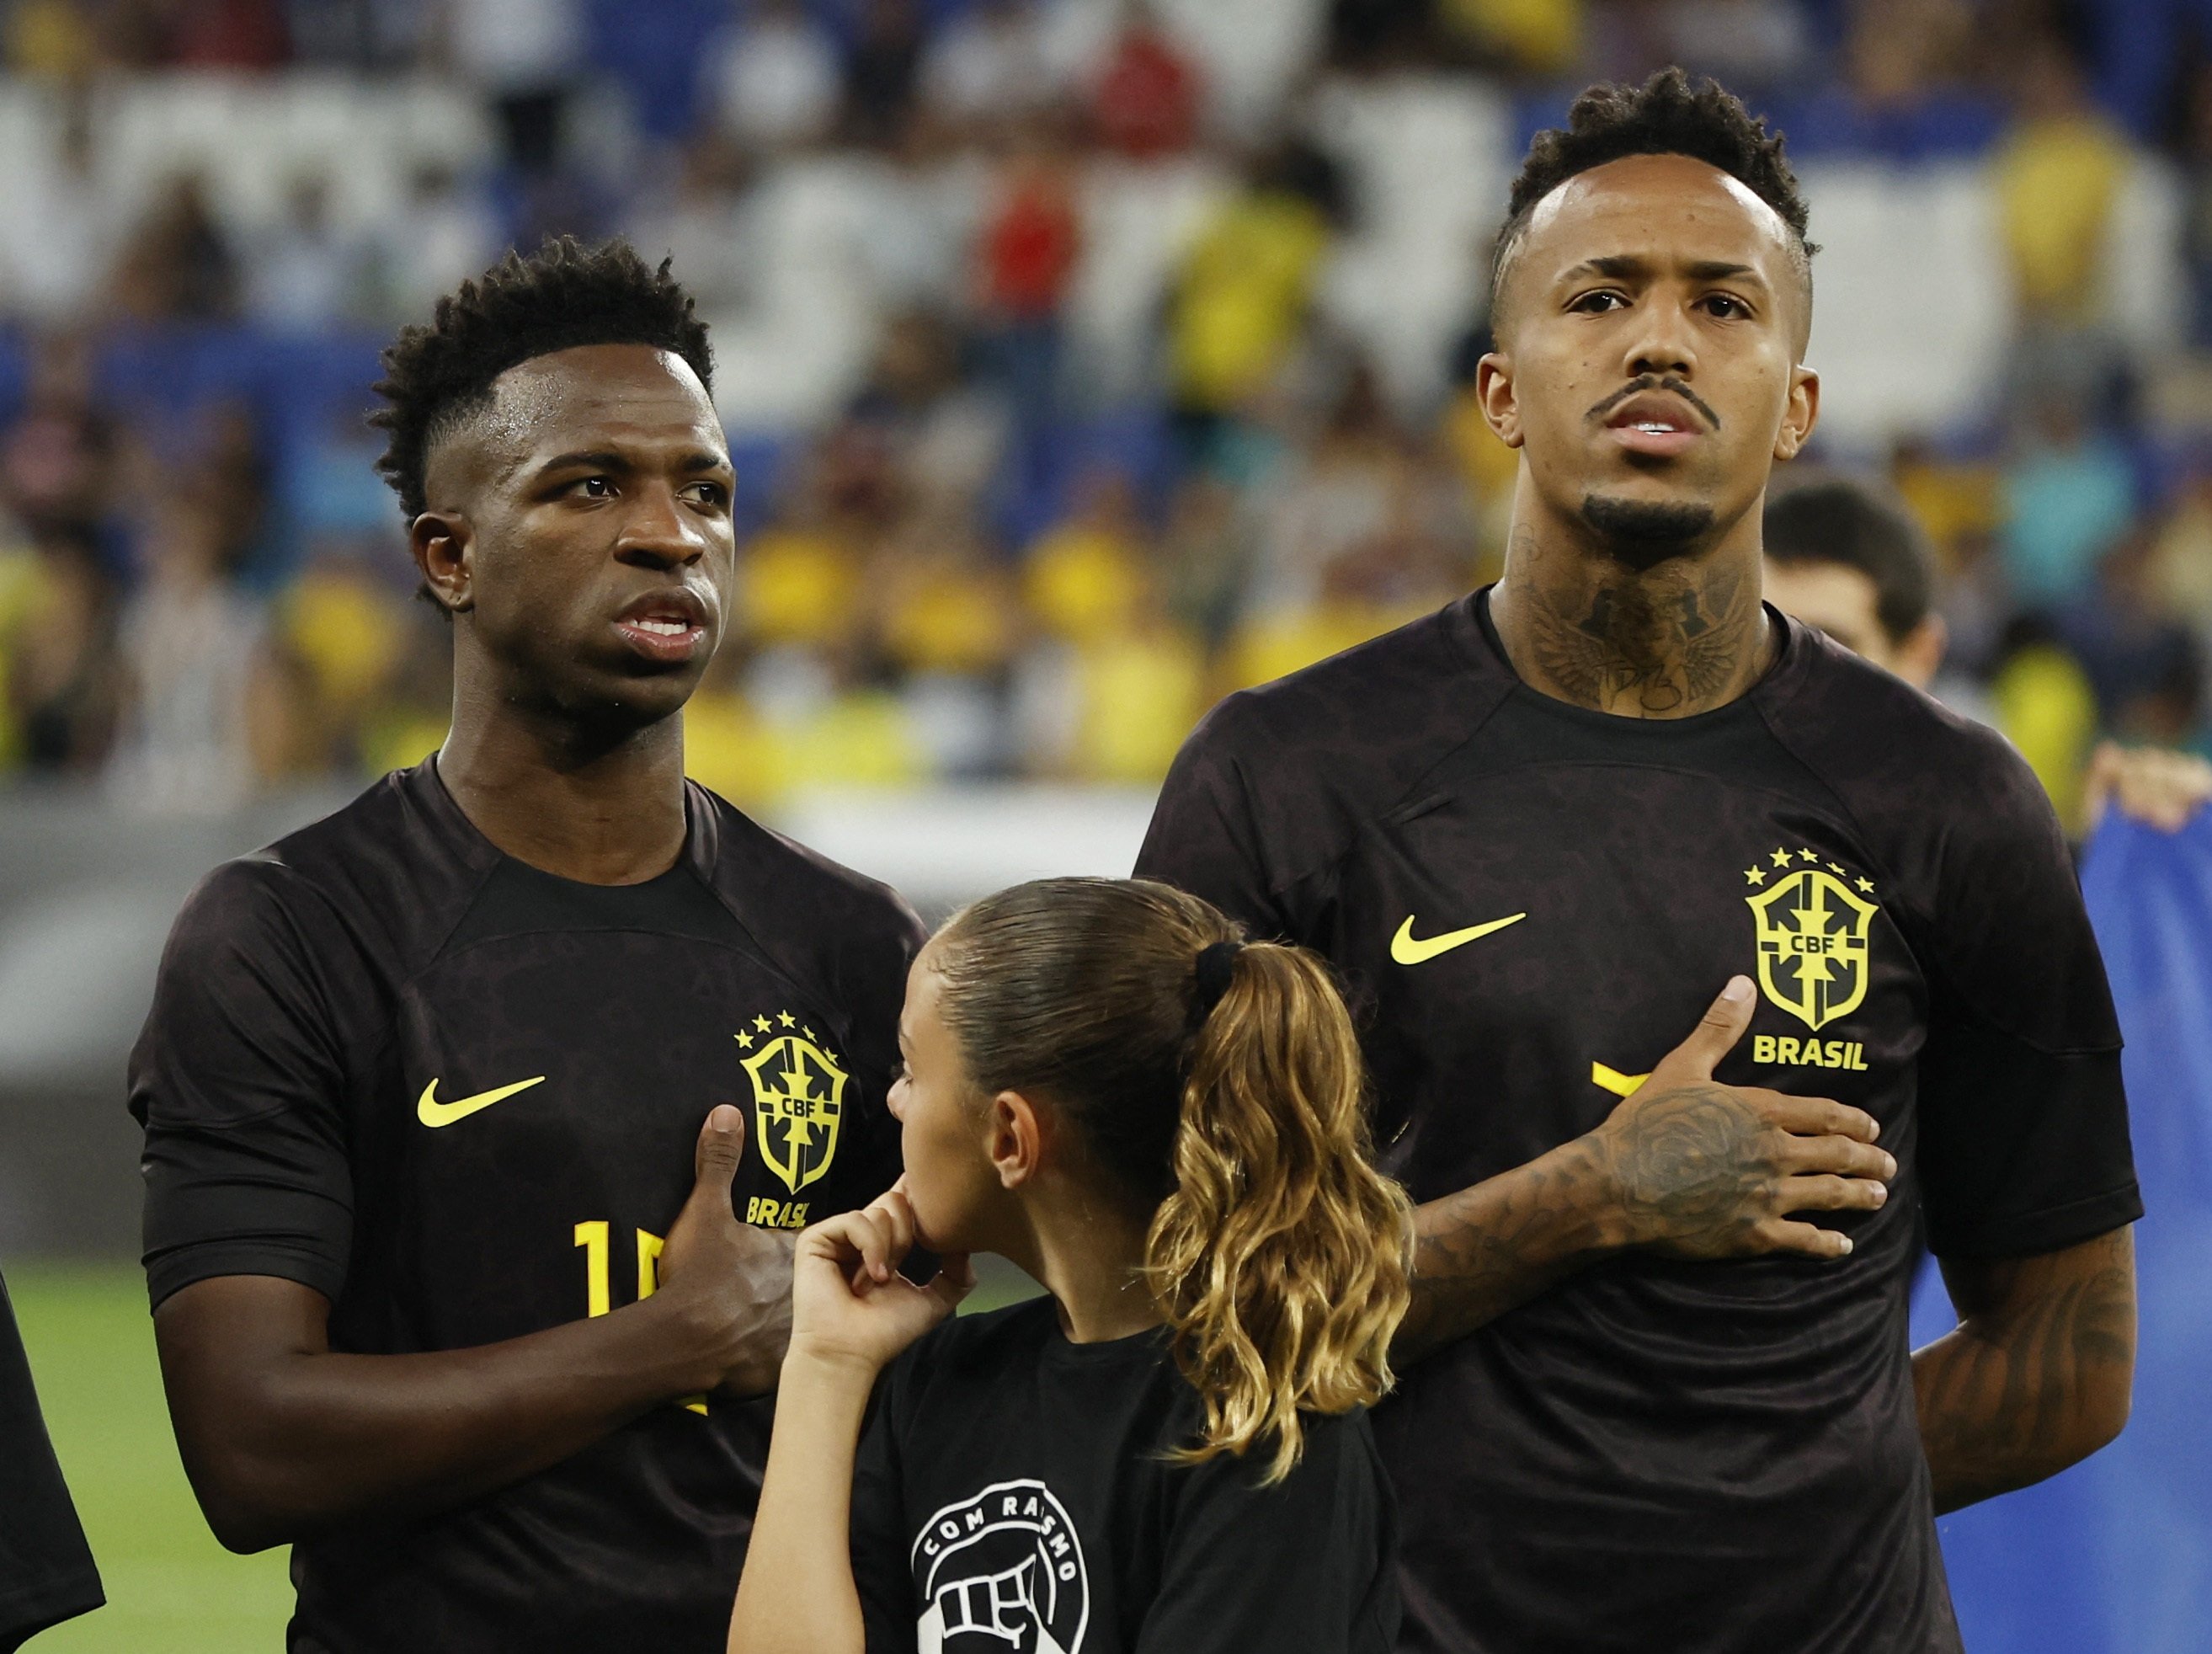 Brazil Wear Black Kit For First Time in History - Footy Headlines